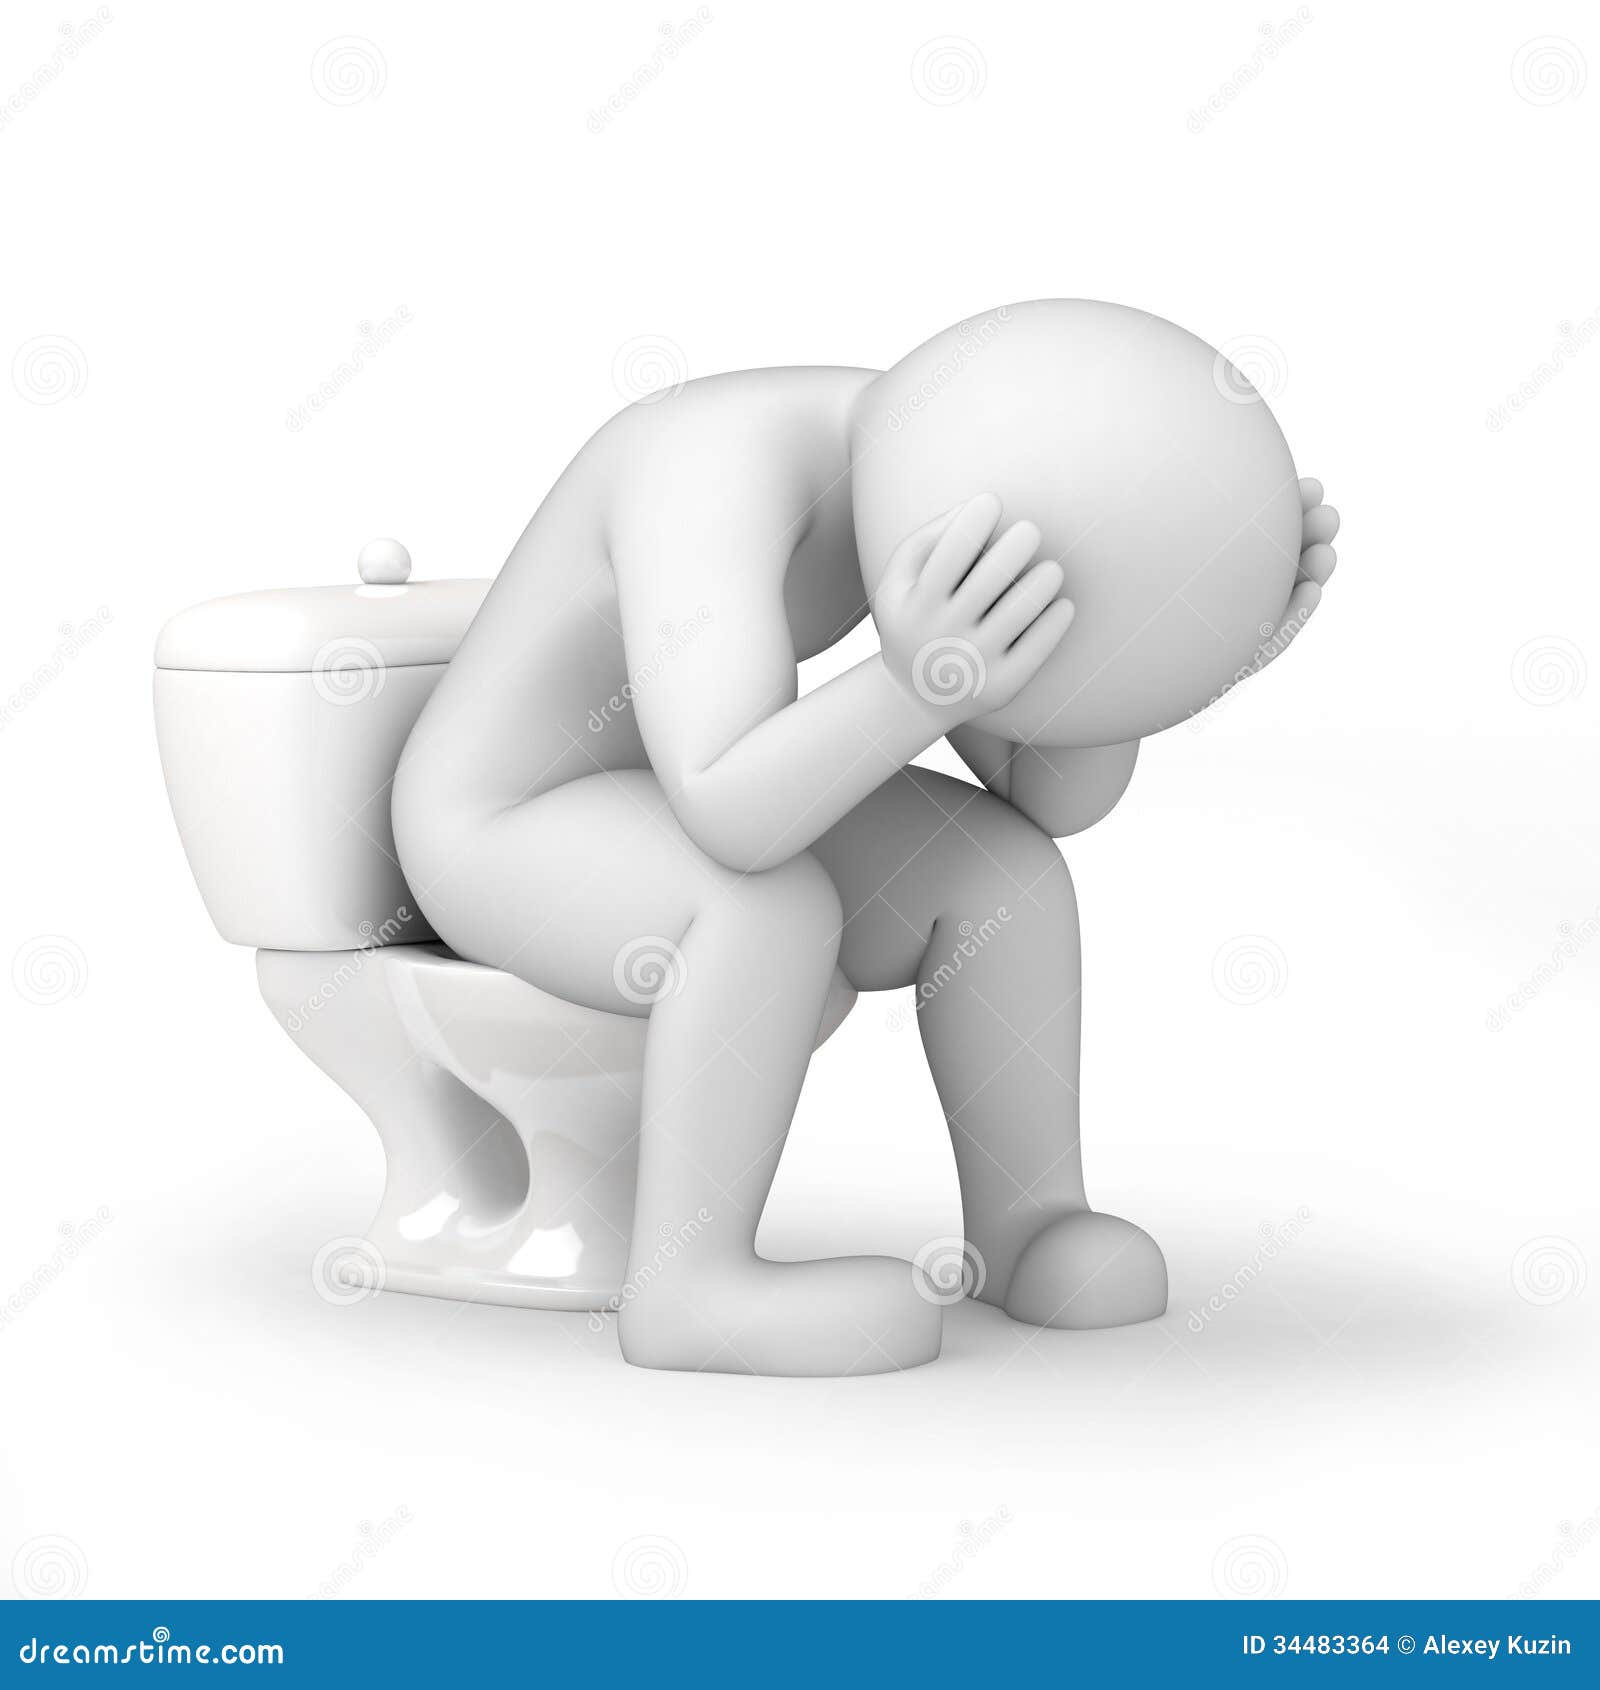 clipart man on toilet - photo #48